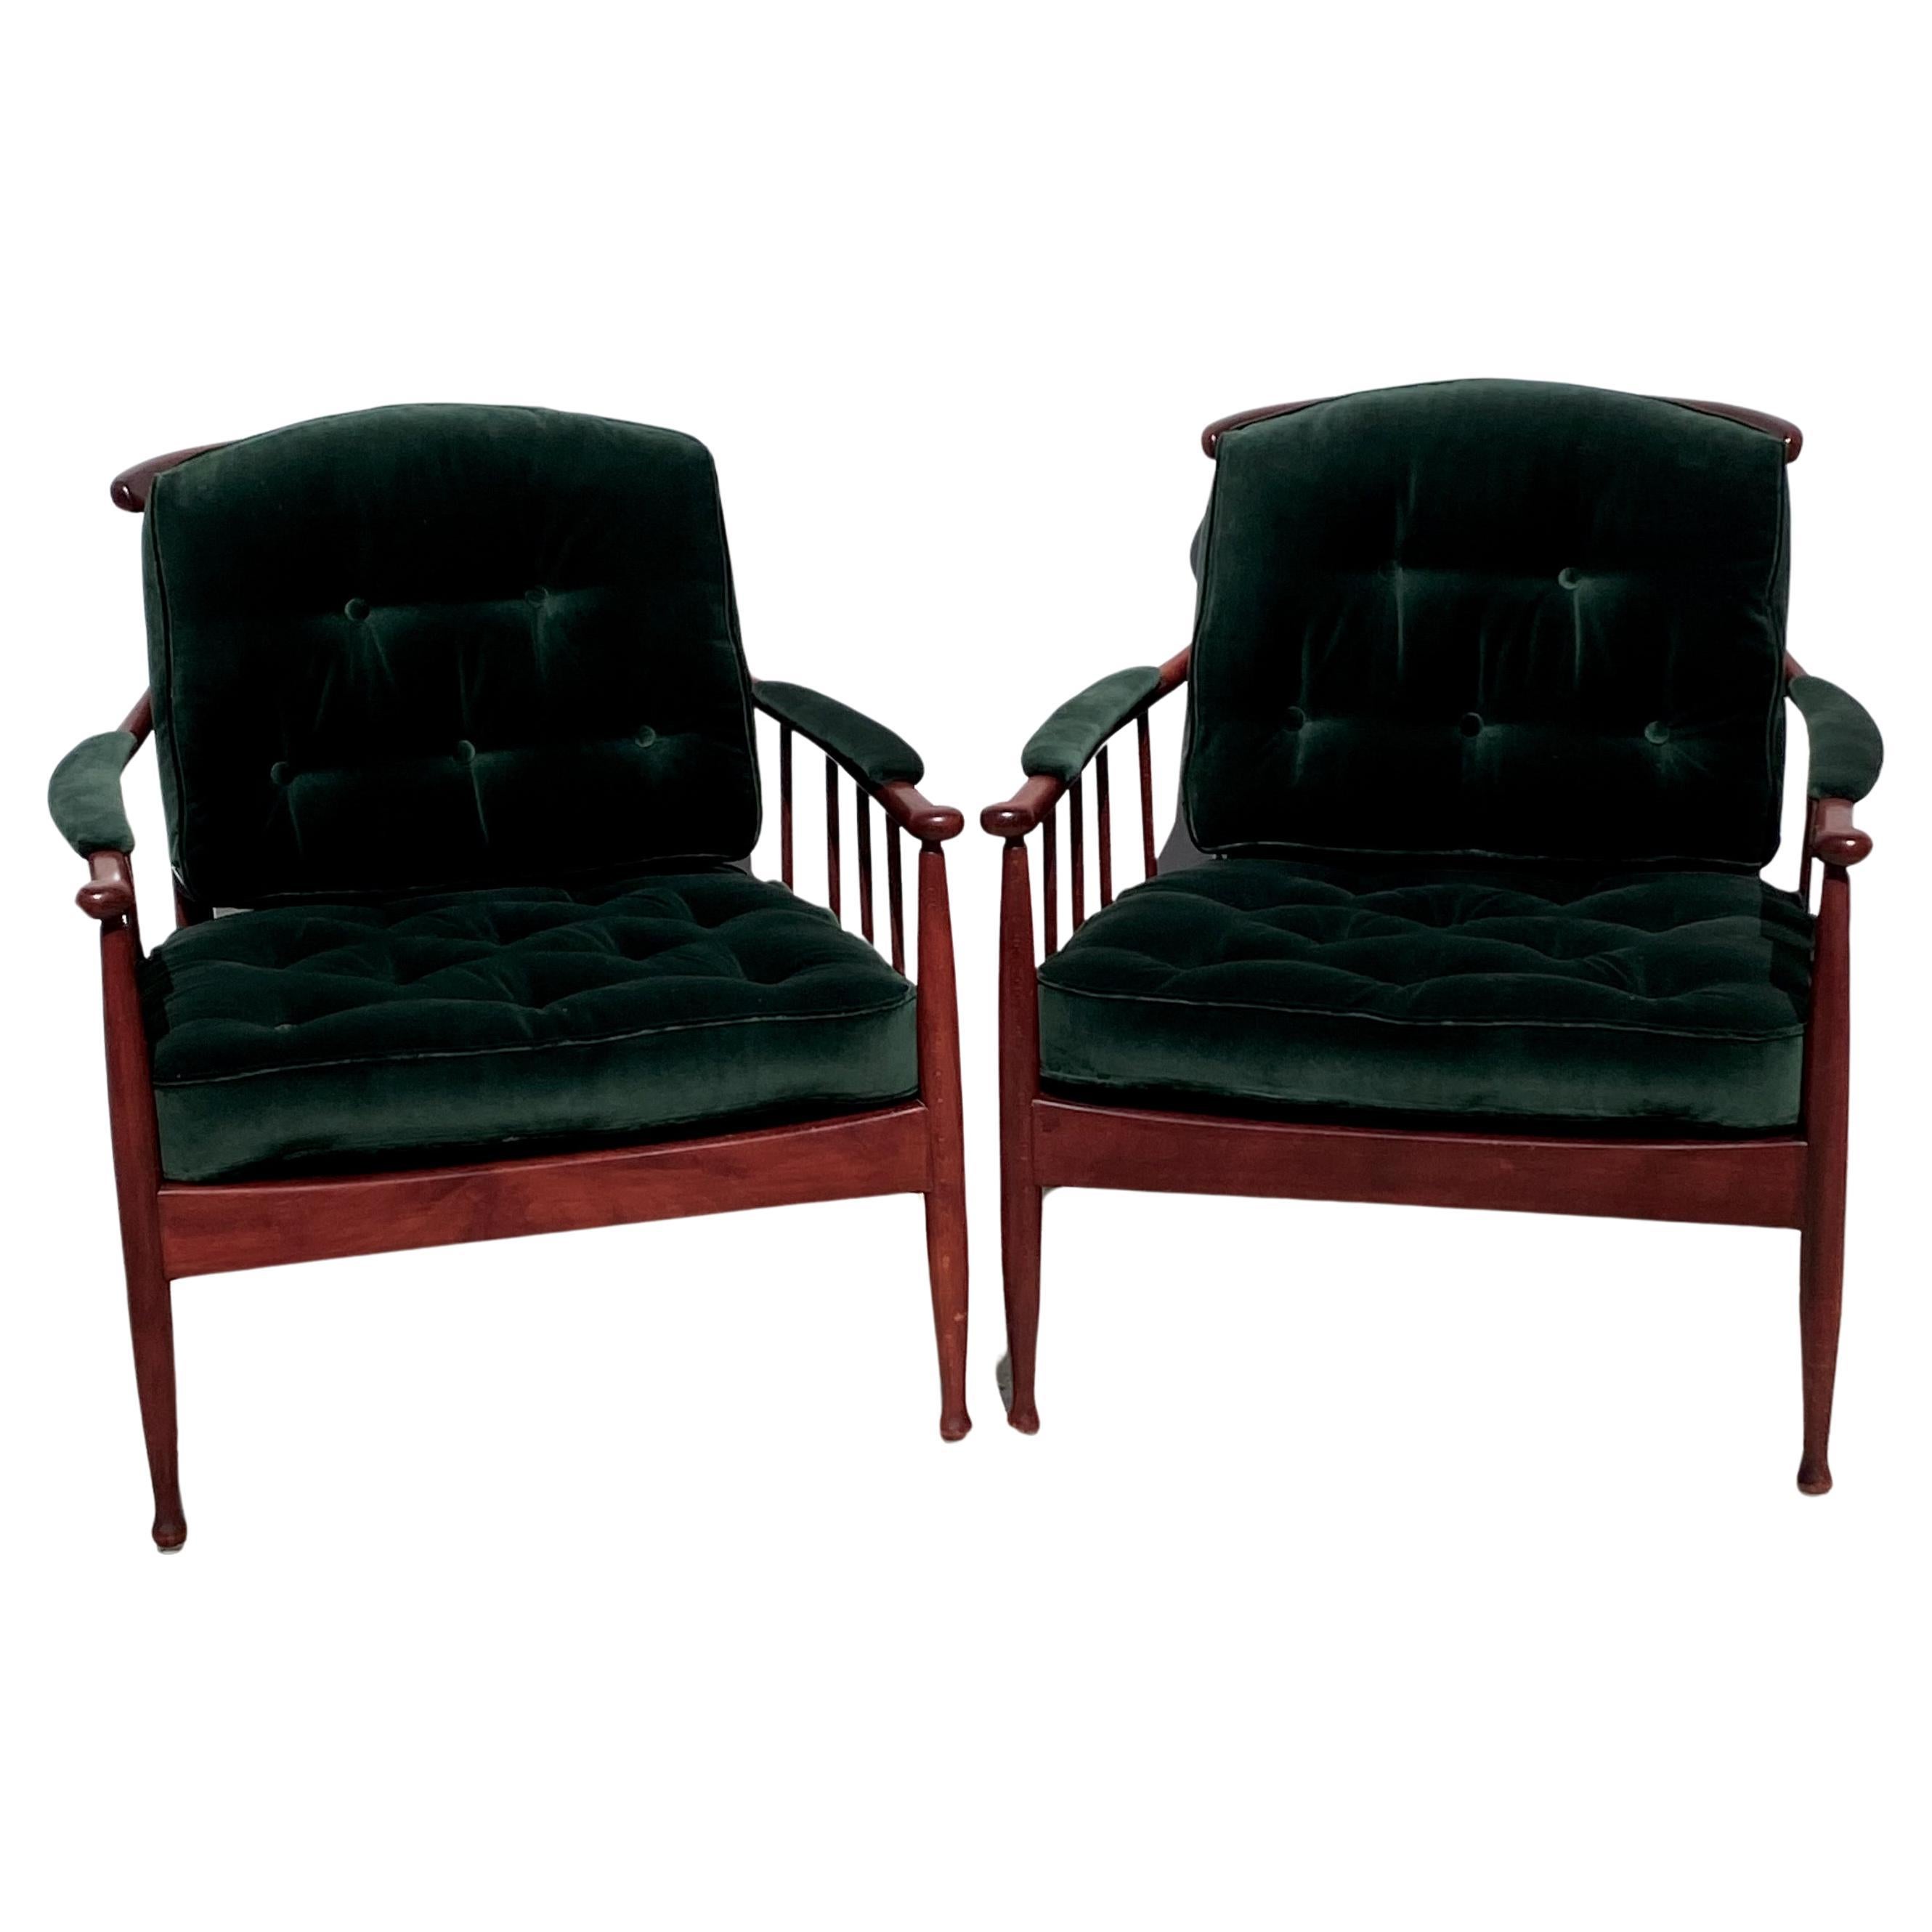 ”Skrindan” armchairs by Kerstin Hörlin Holmquist for OPE furniture Sweden